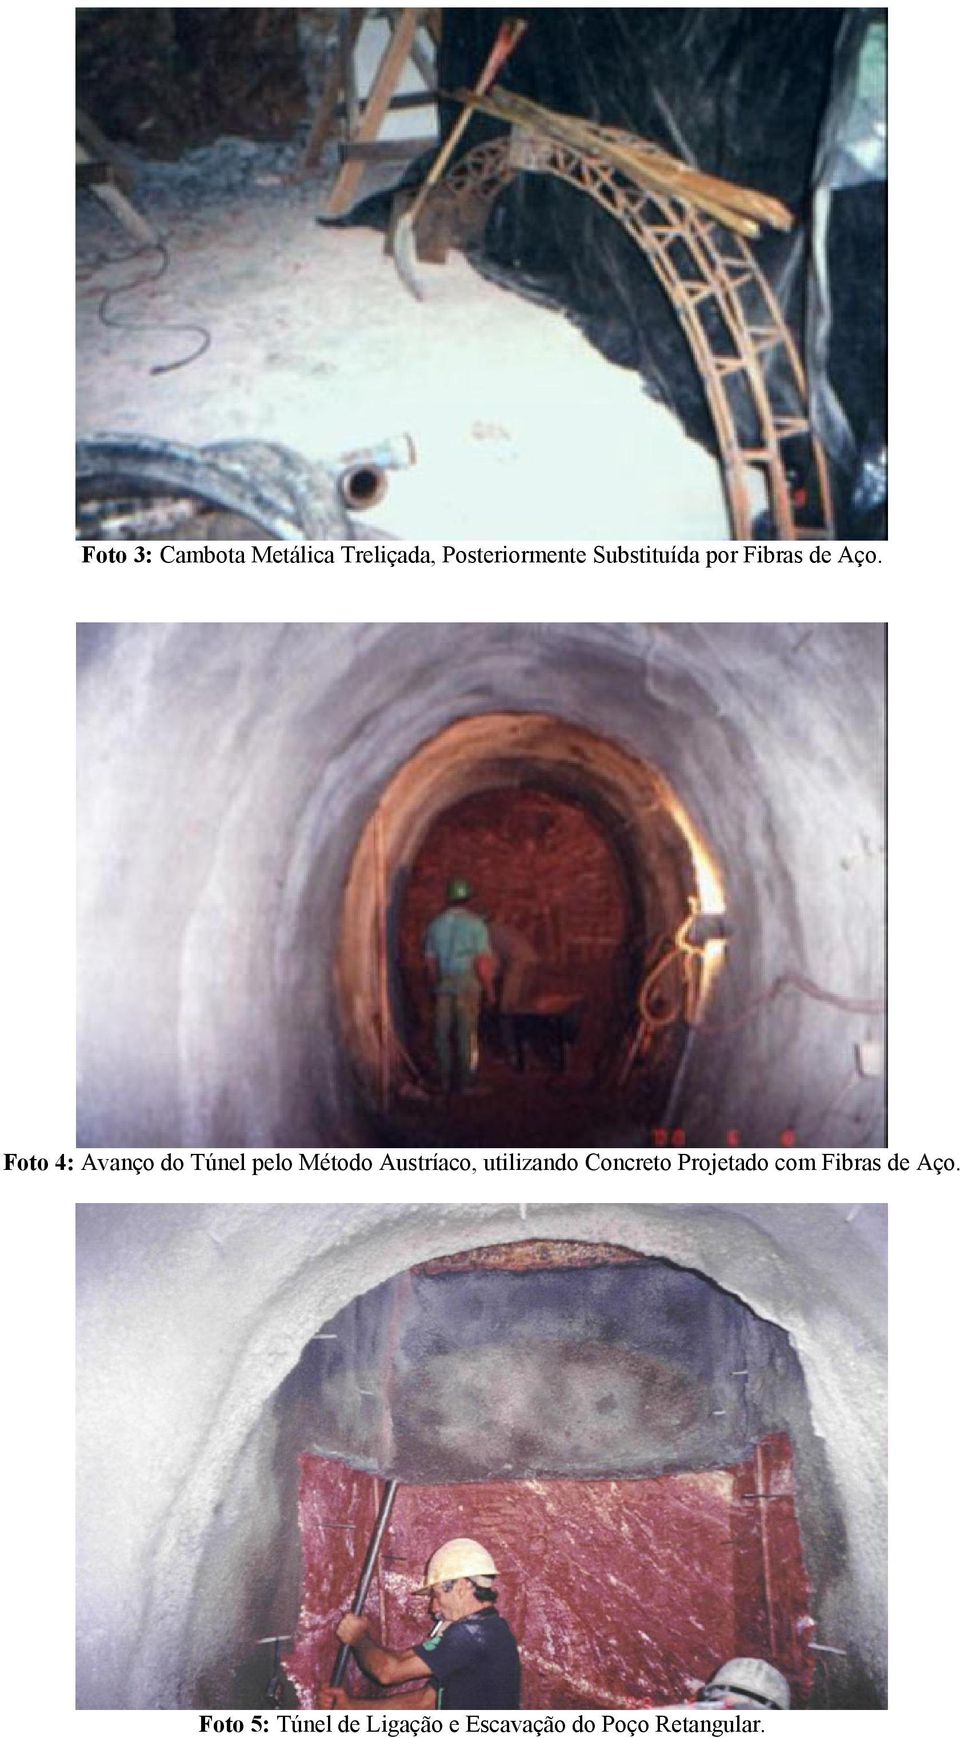 Foto 4: Avanço do Túnel pelo Método Austríaco, utilizando